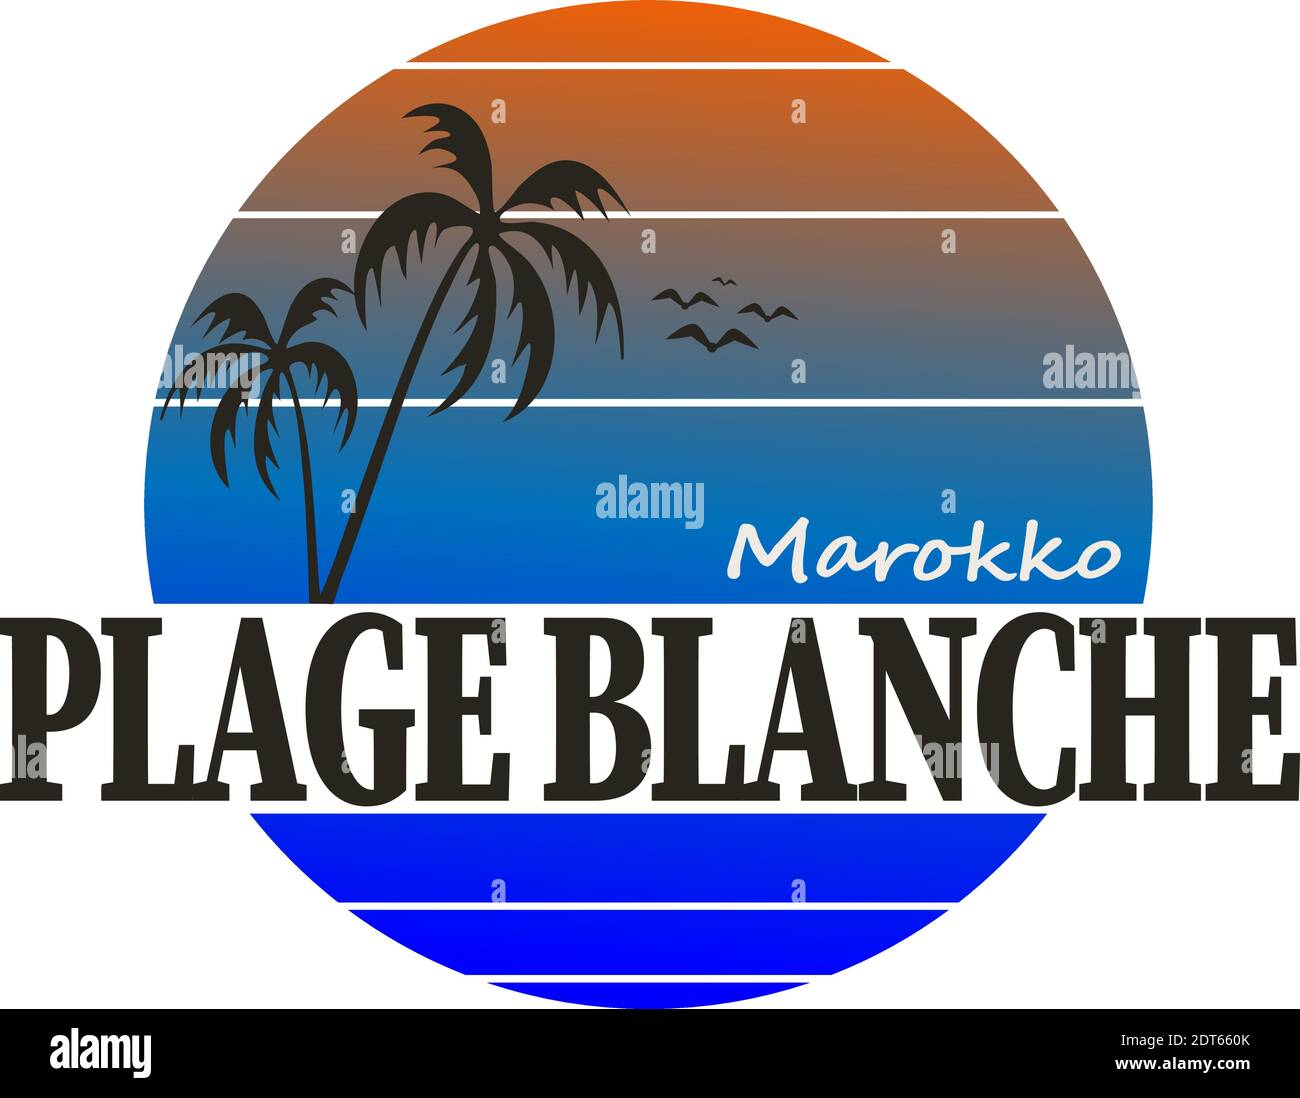 Plage Blanche MAROKKO palm tree dune logo on a white background Stock Vector